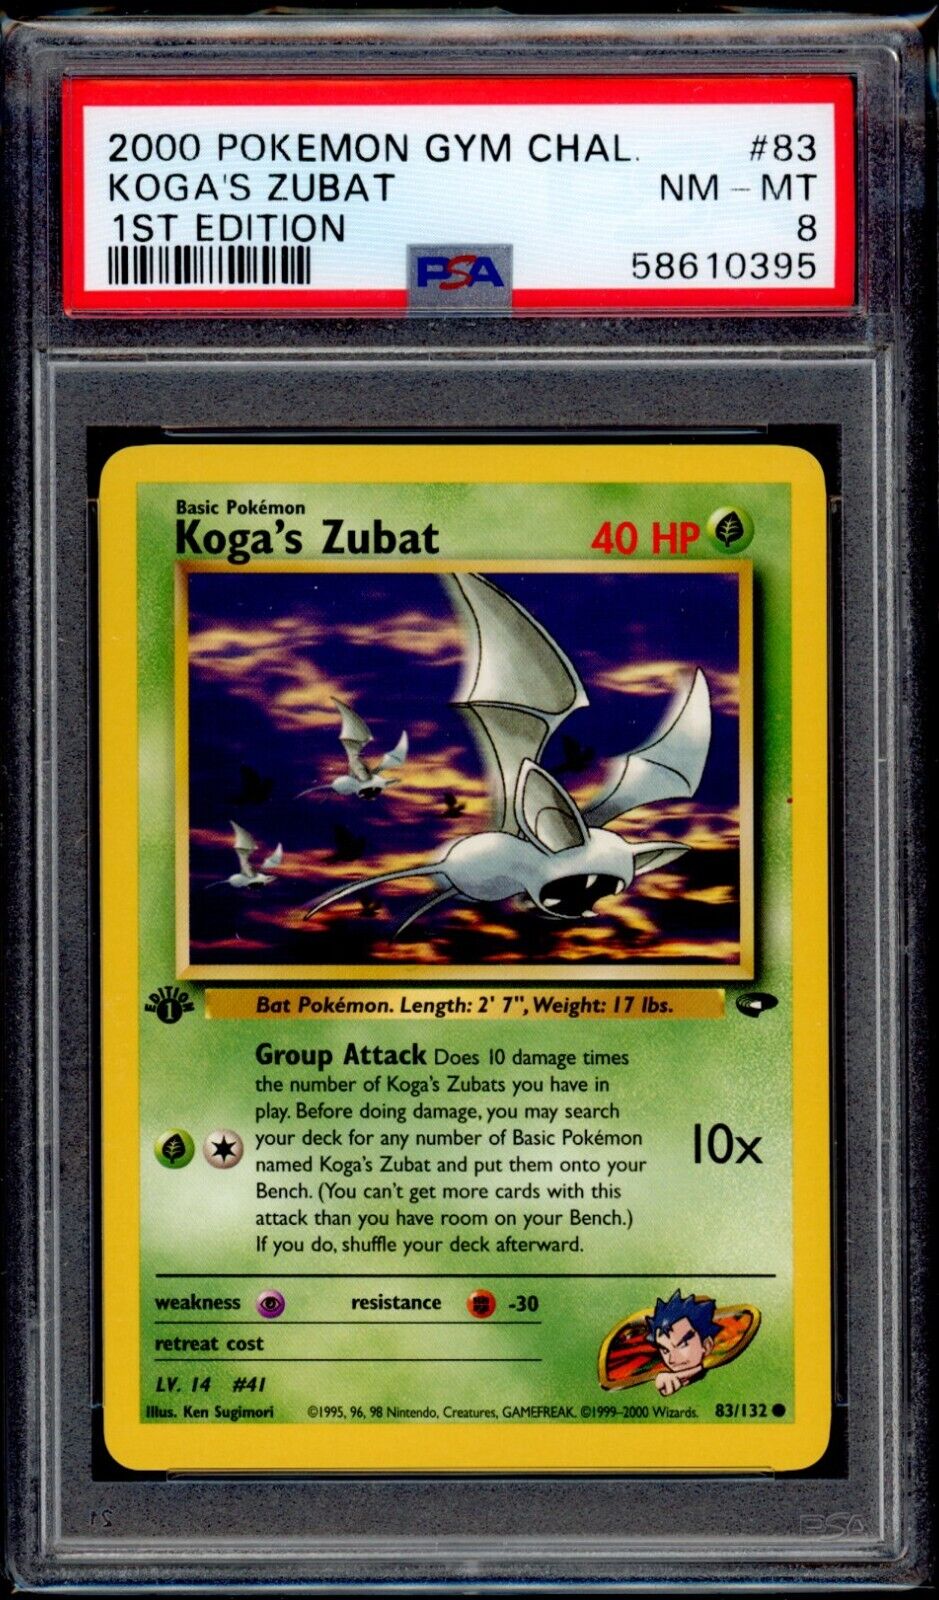 PSA 8 Koga's Zubat 2000 Pokemon Card 83/132 1st Edition Gym Challenge